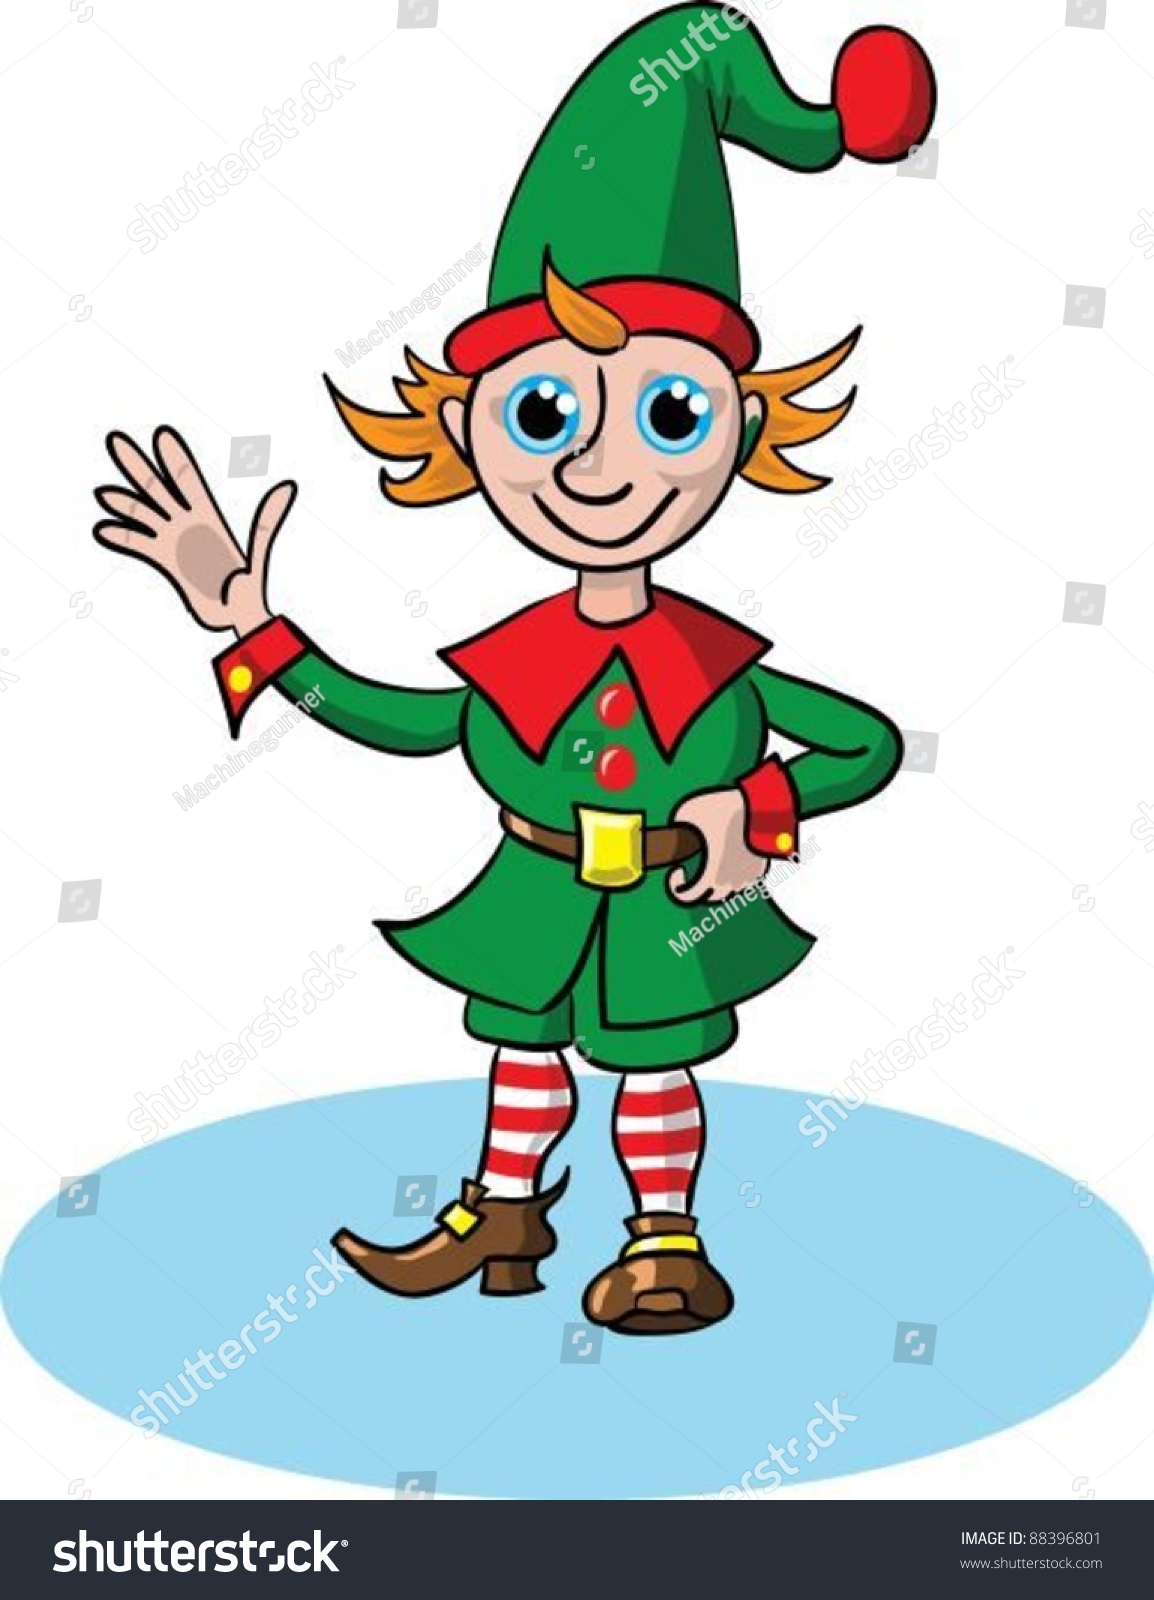 Funny Cartoon Christmas Elf Stock Vector Illustration 88396801 ...